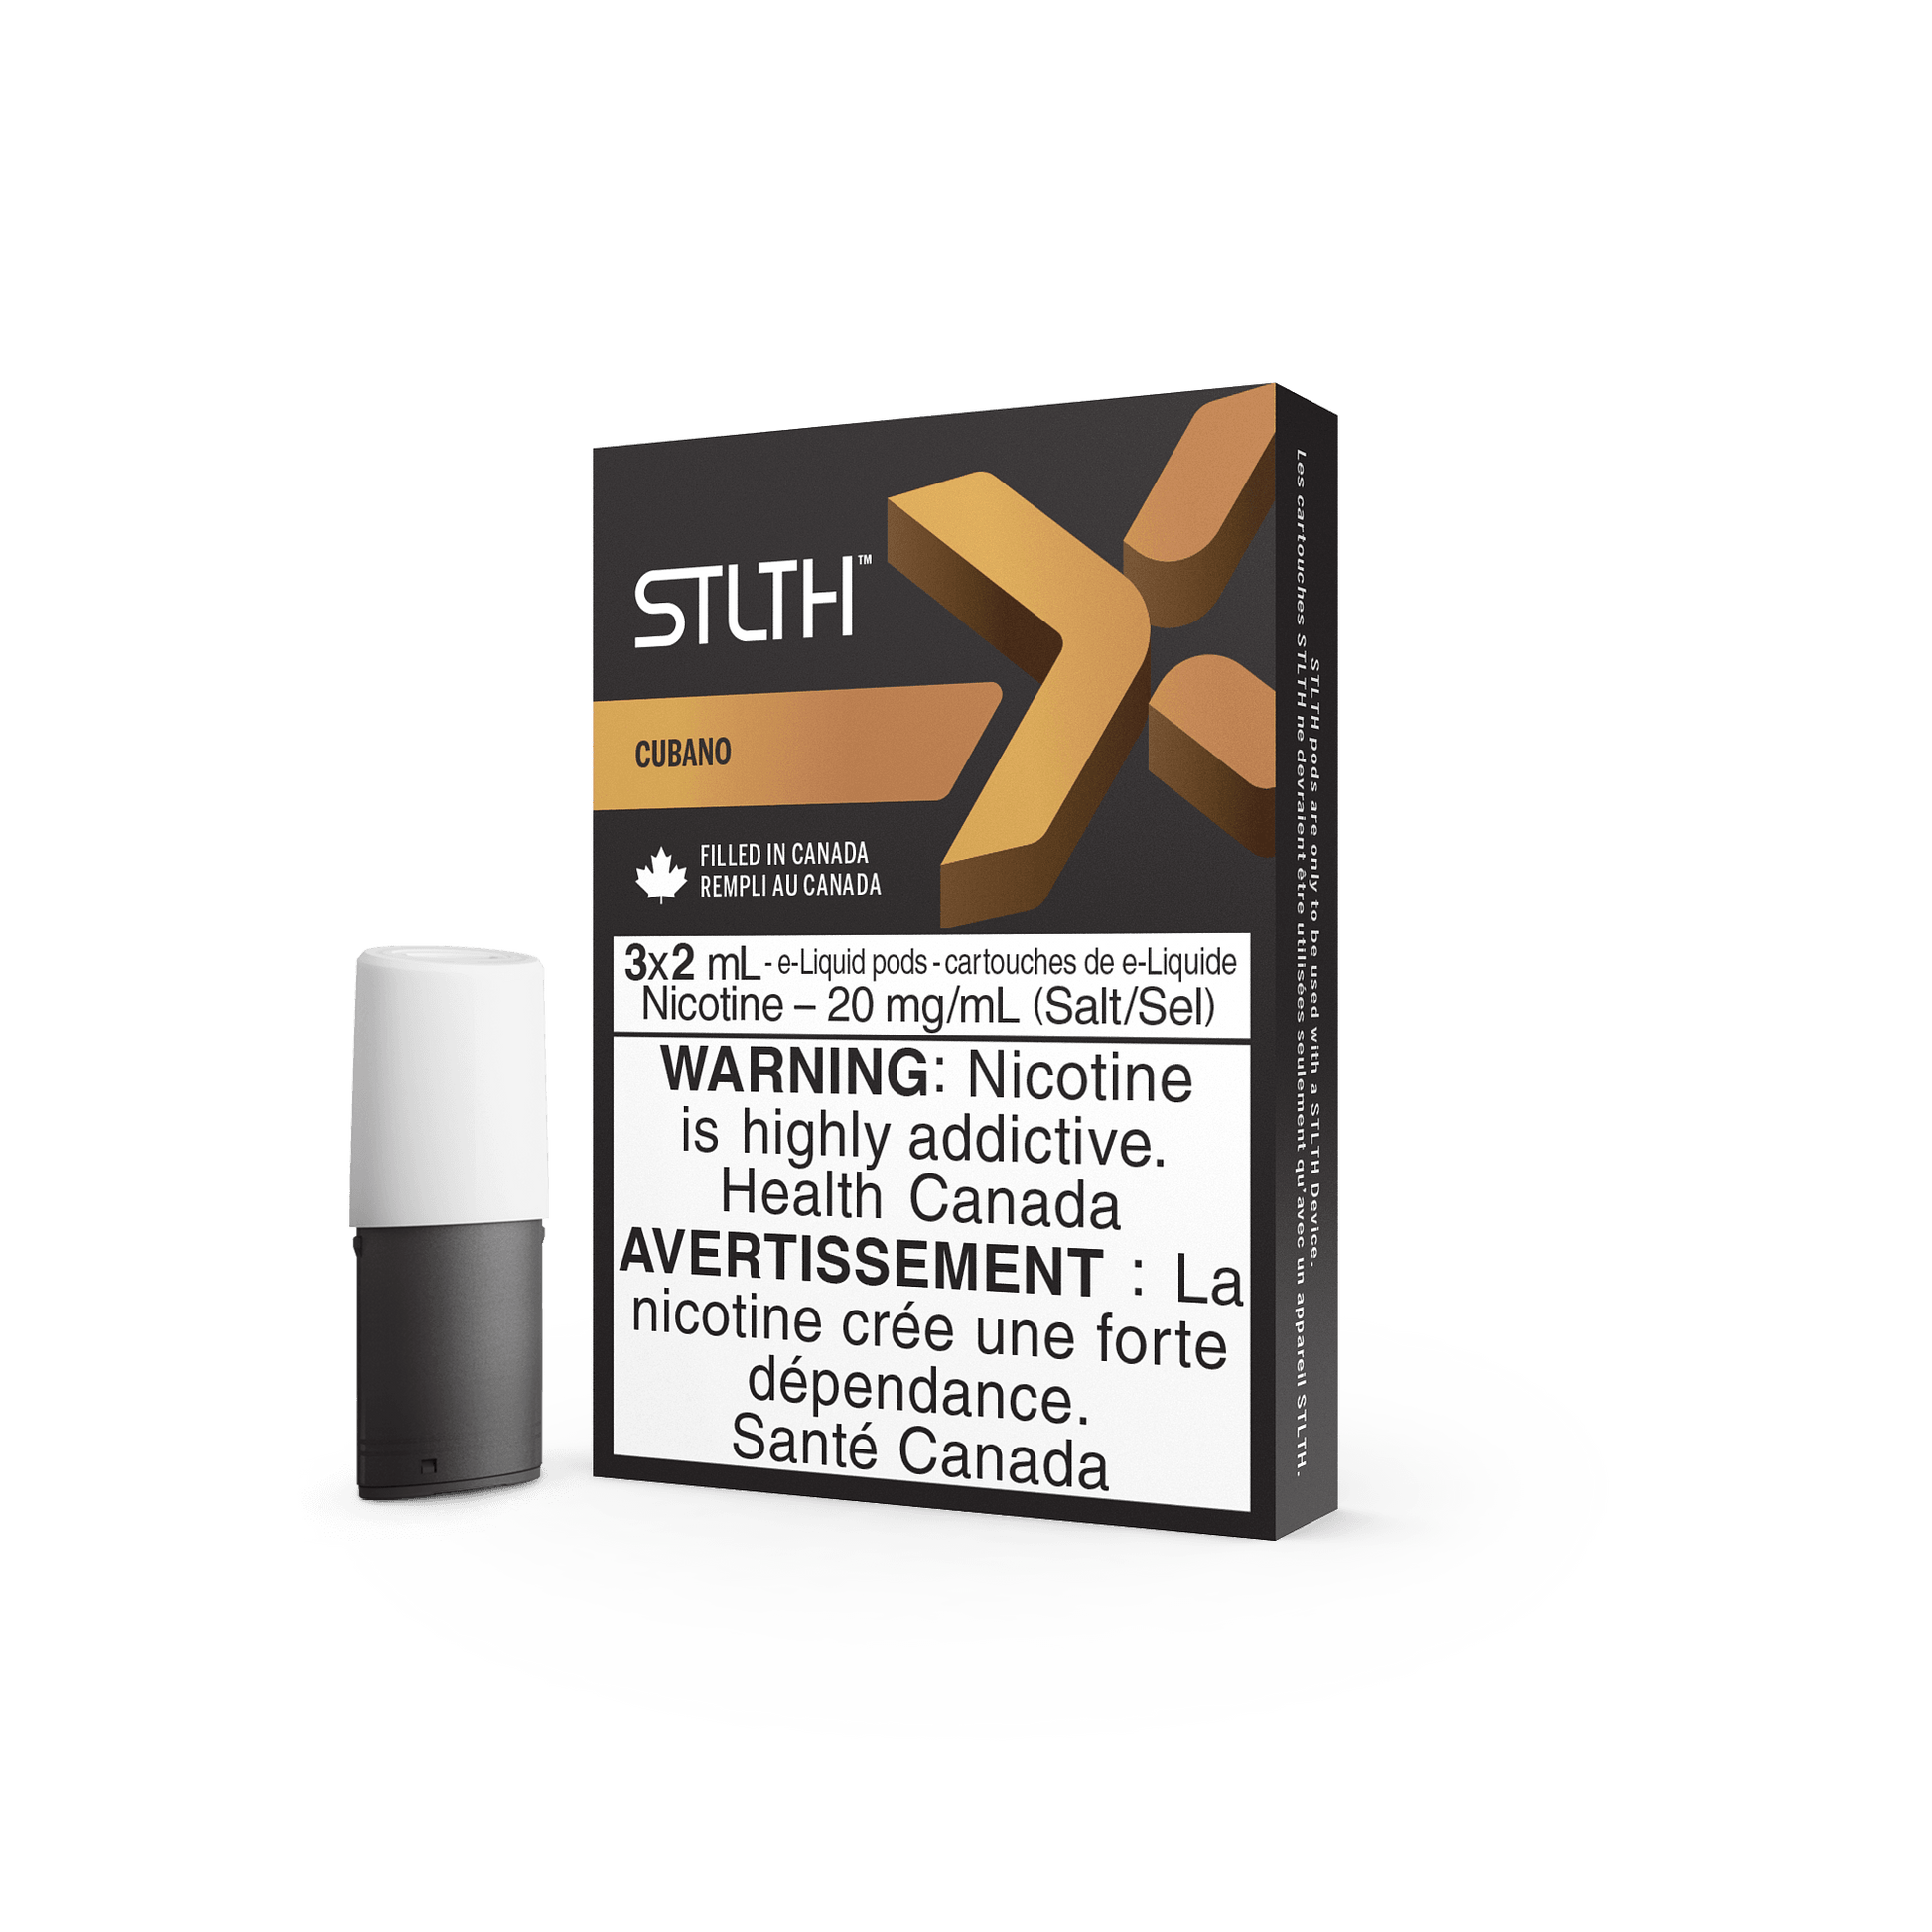 STLTH X - Cubano - Vapor Shoppe